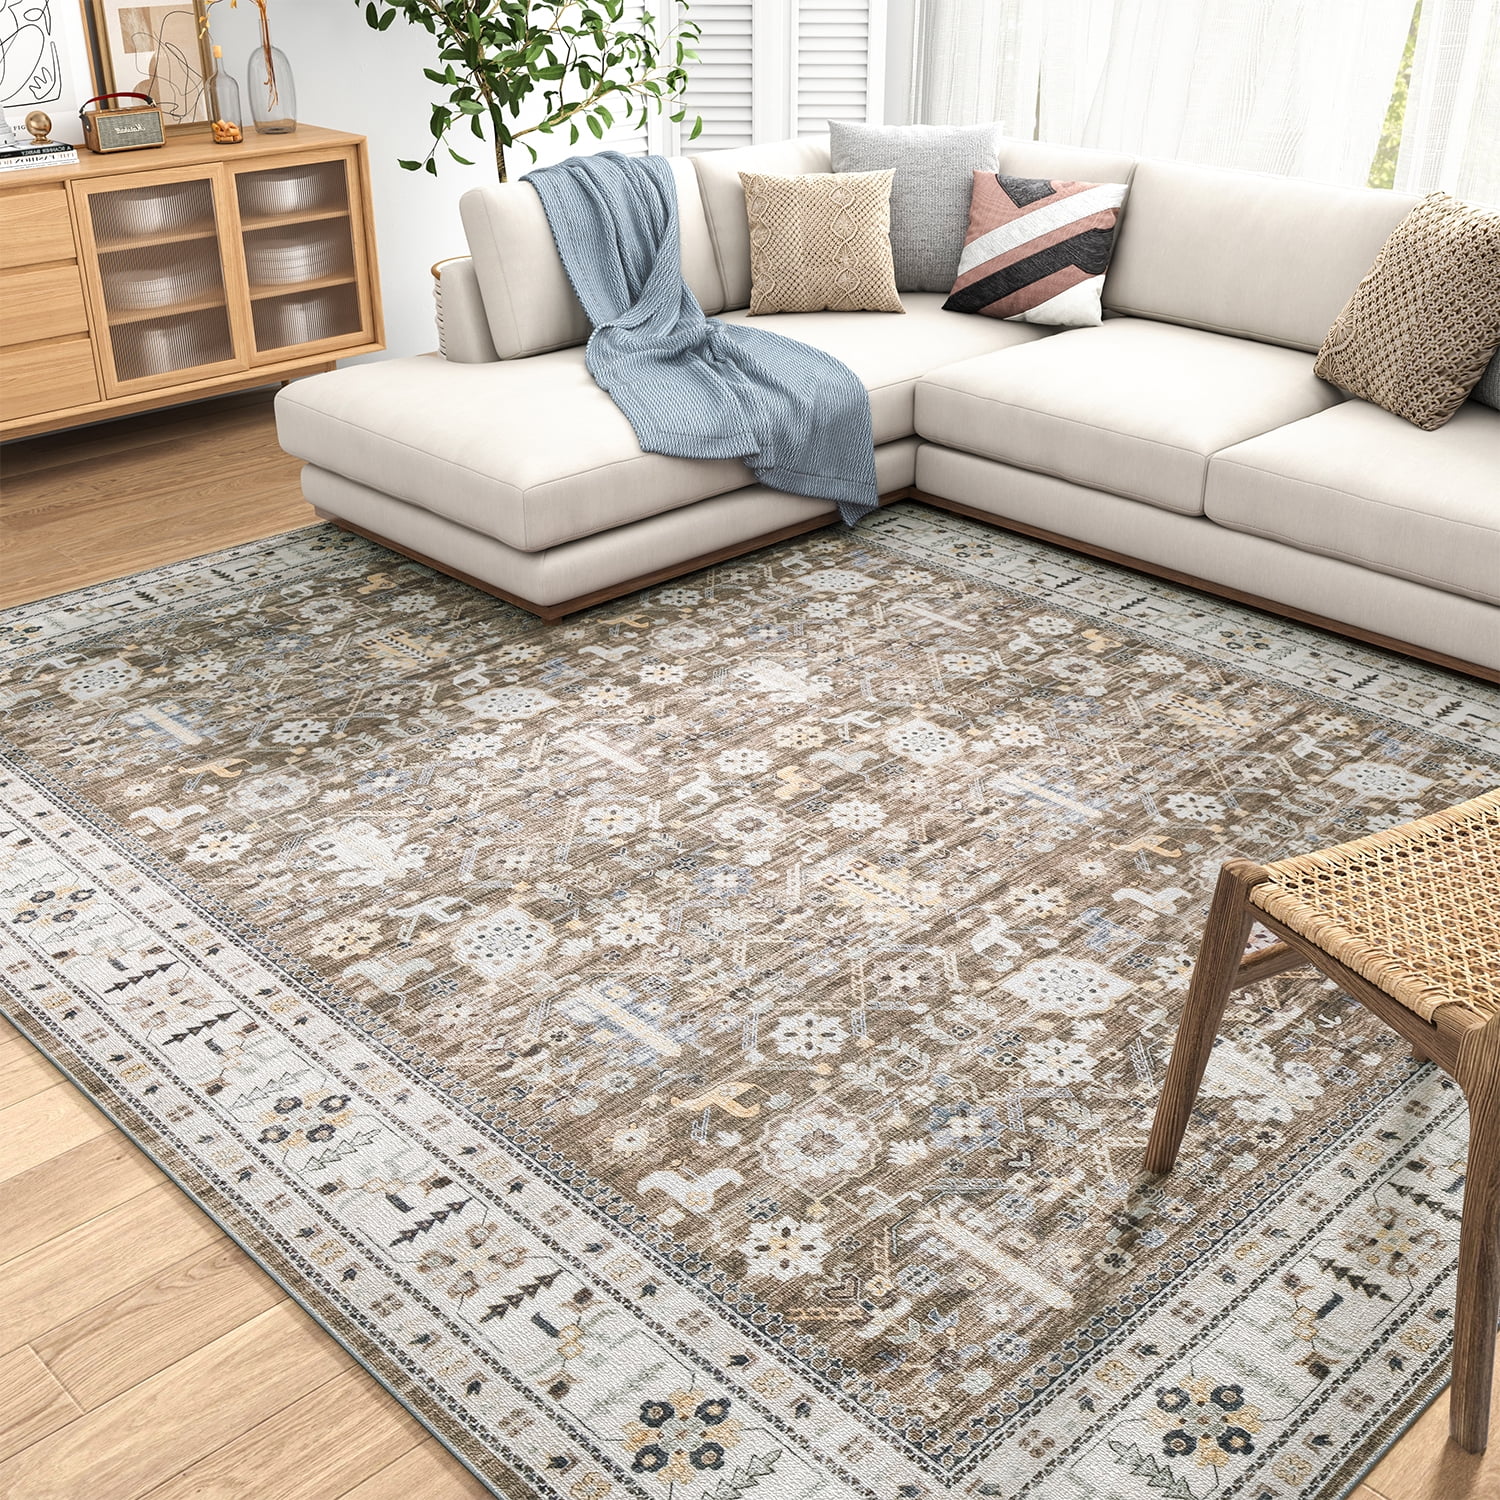 Juhai 2Pcs Floor Carpet Anti-slip Cuttable Non Pilling Water Absorbent  Jigsaw Design Living Room Bedroom Floor Area Rug Home Decor 